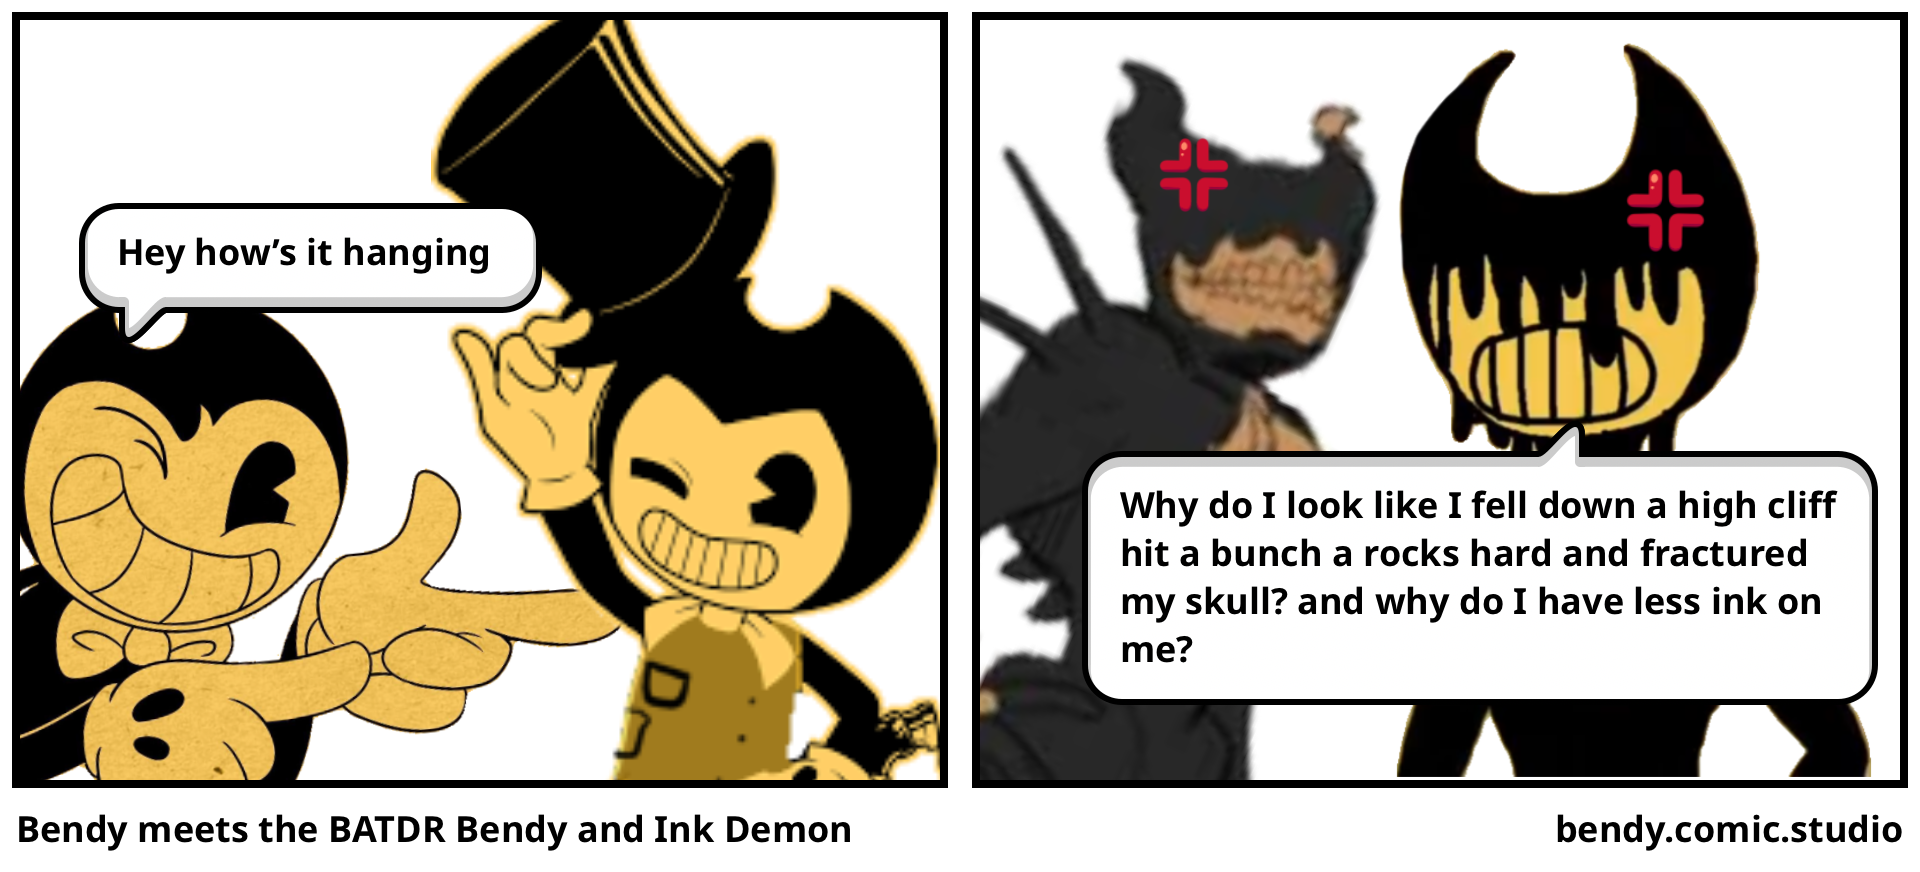 Bendy meets the BATDR Bendy and Ink Demon 